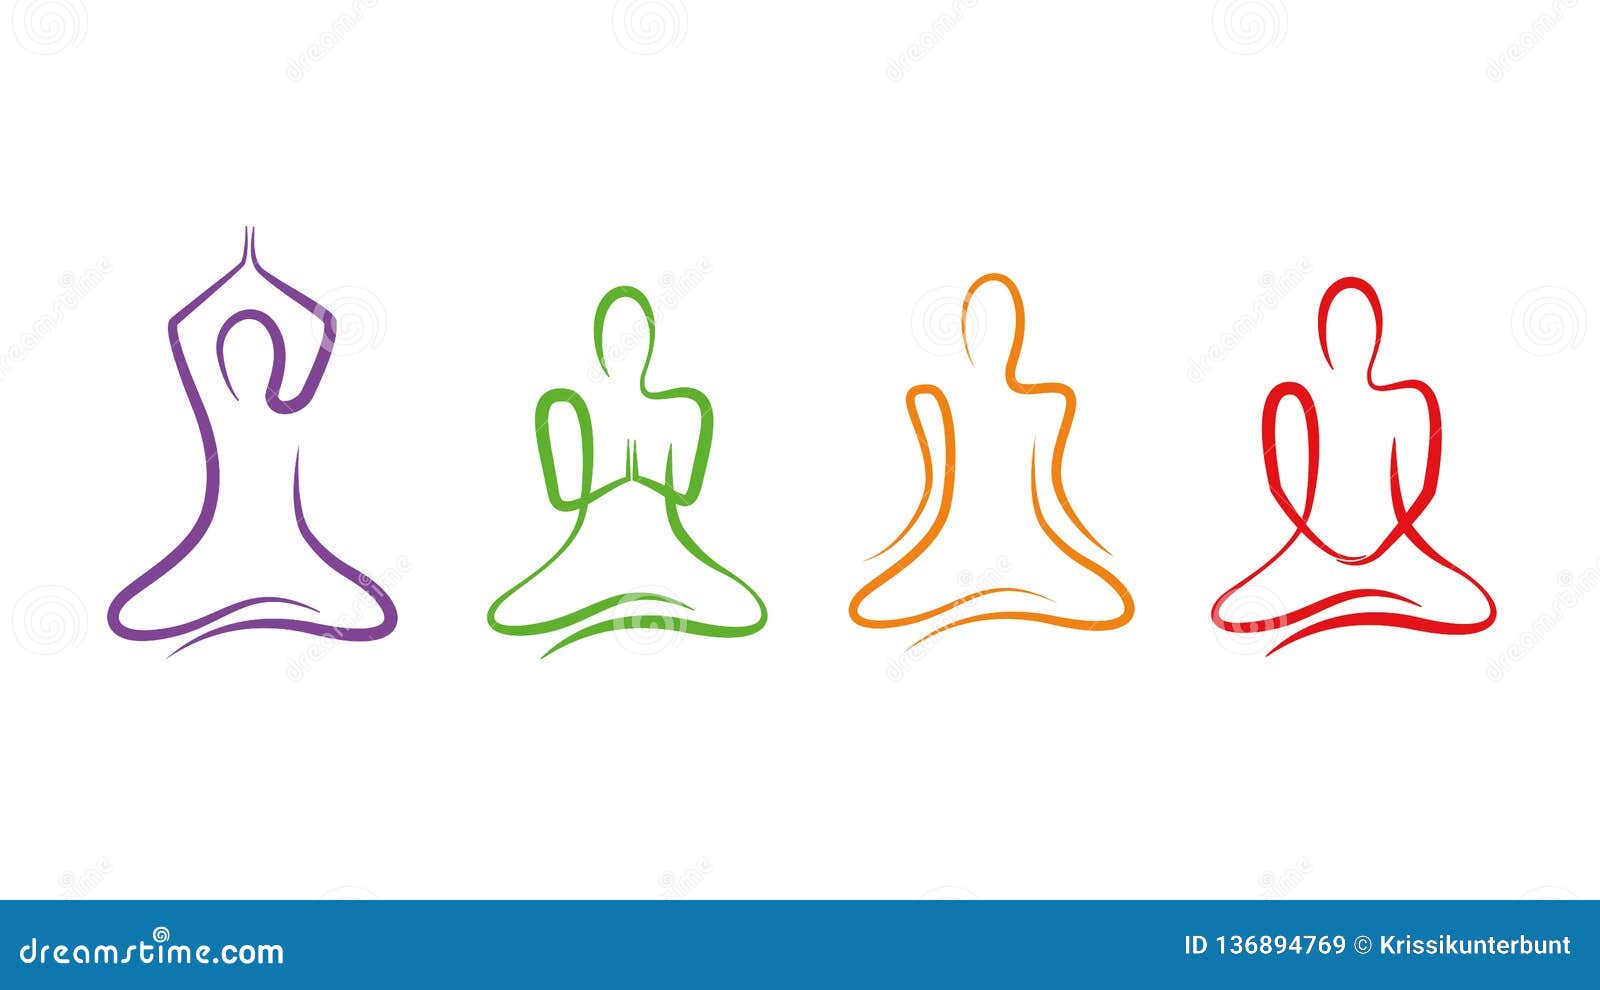 https://thumbs.dreamstime.com/z/set-colorful-yoga-poses-line-drawing-set-colorful-yoga-poses-line-drawing-vector-illustration-eps-136894769.jpg